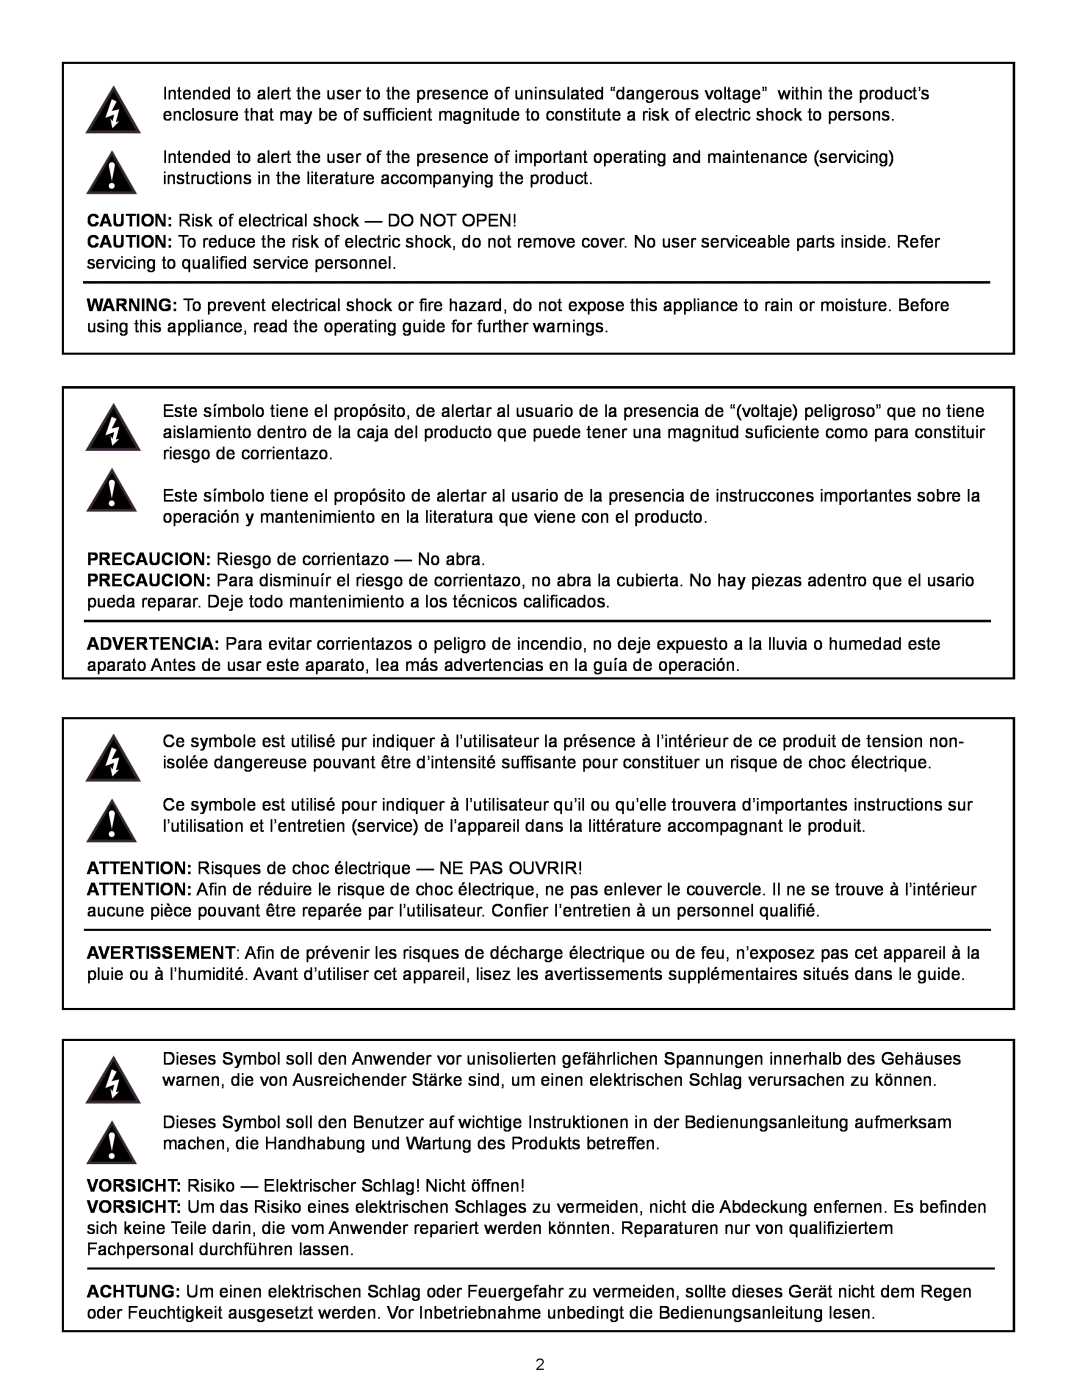 Peavey XR 696 manual CAUTION Risk of electrical shock - DO NOT OPEN, PRECAUCION Riesgo de corrientazo - No abra 